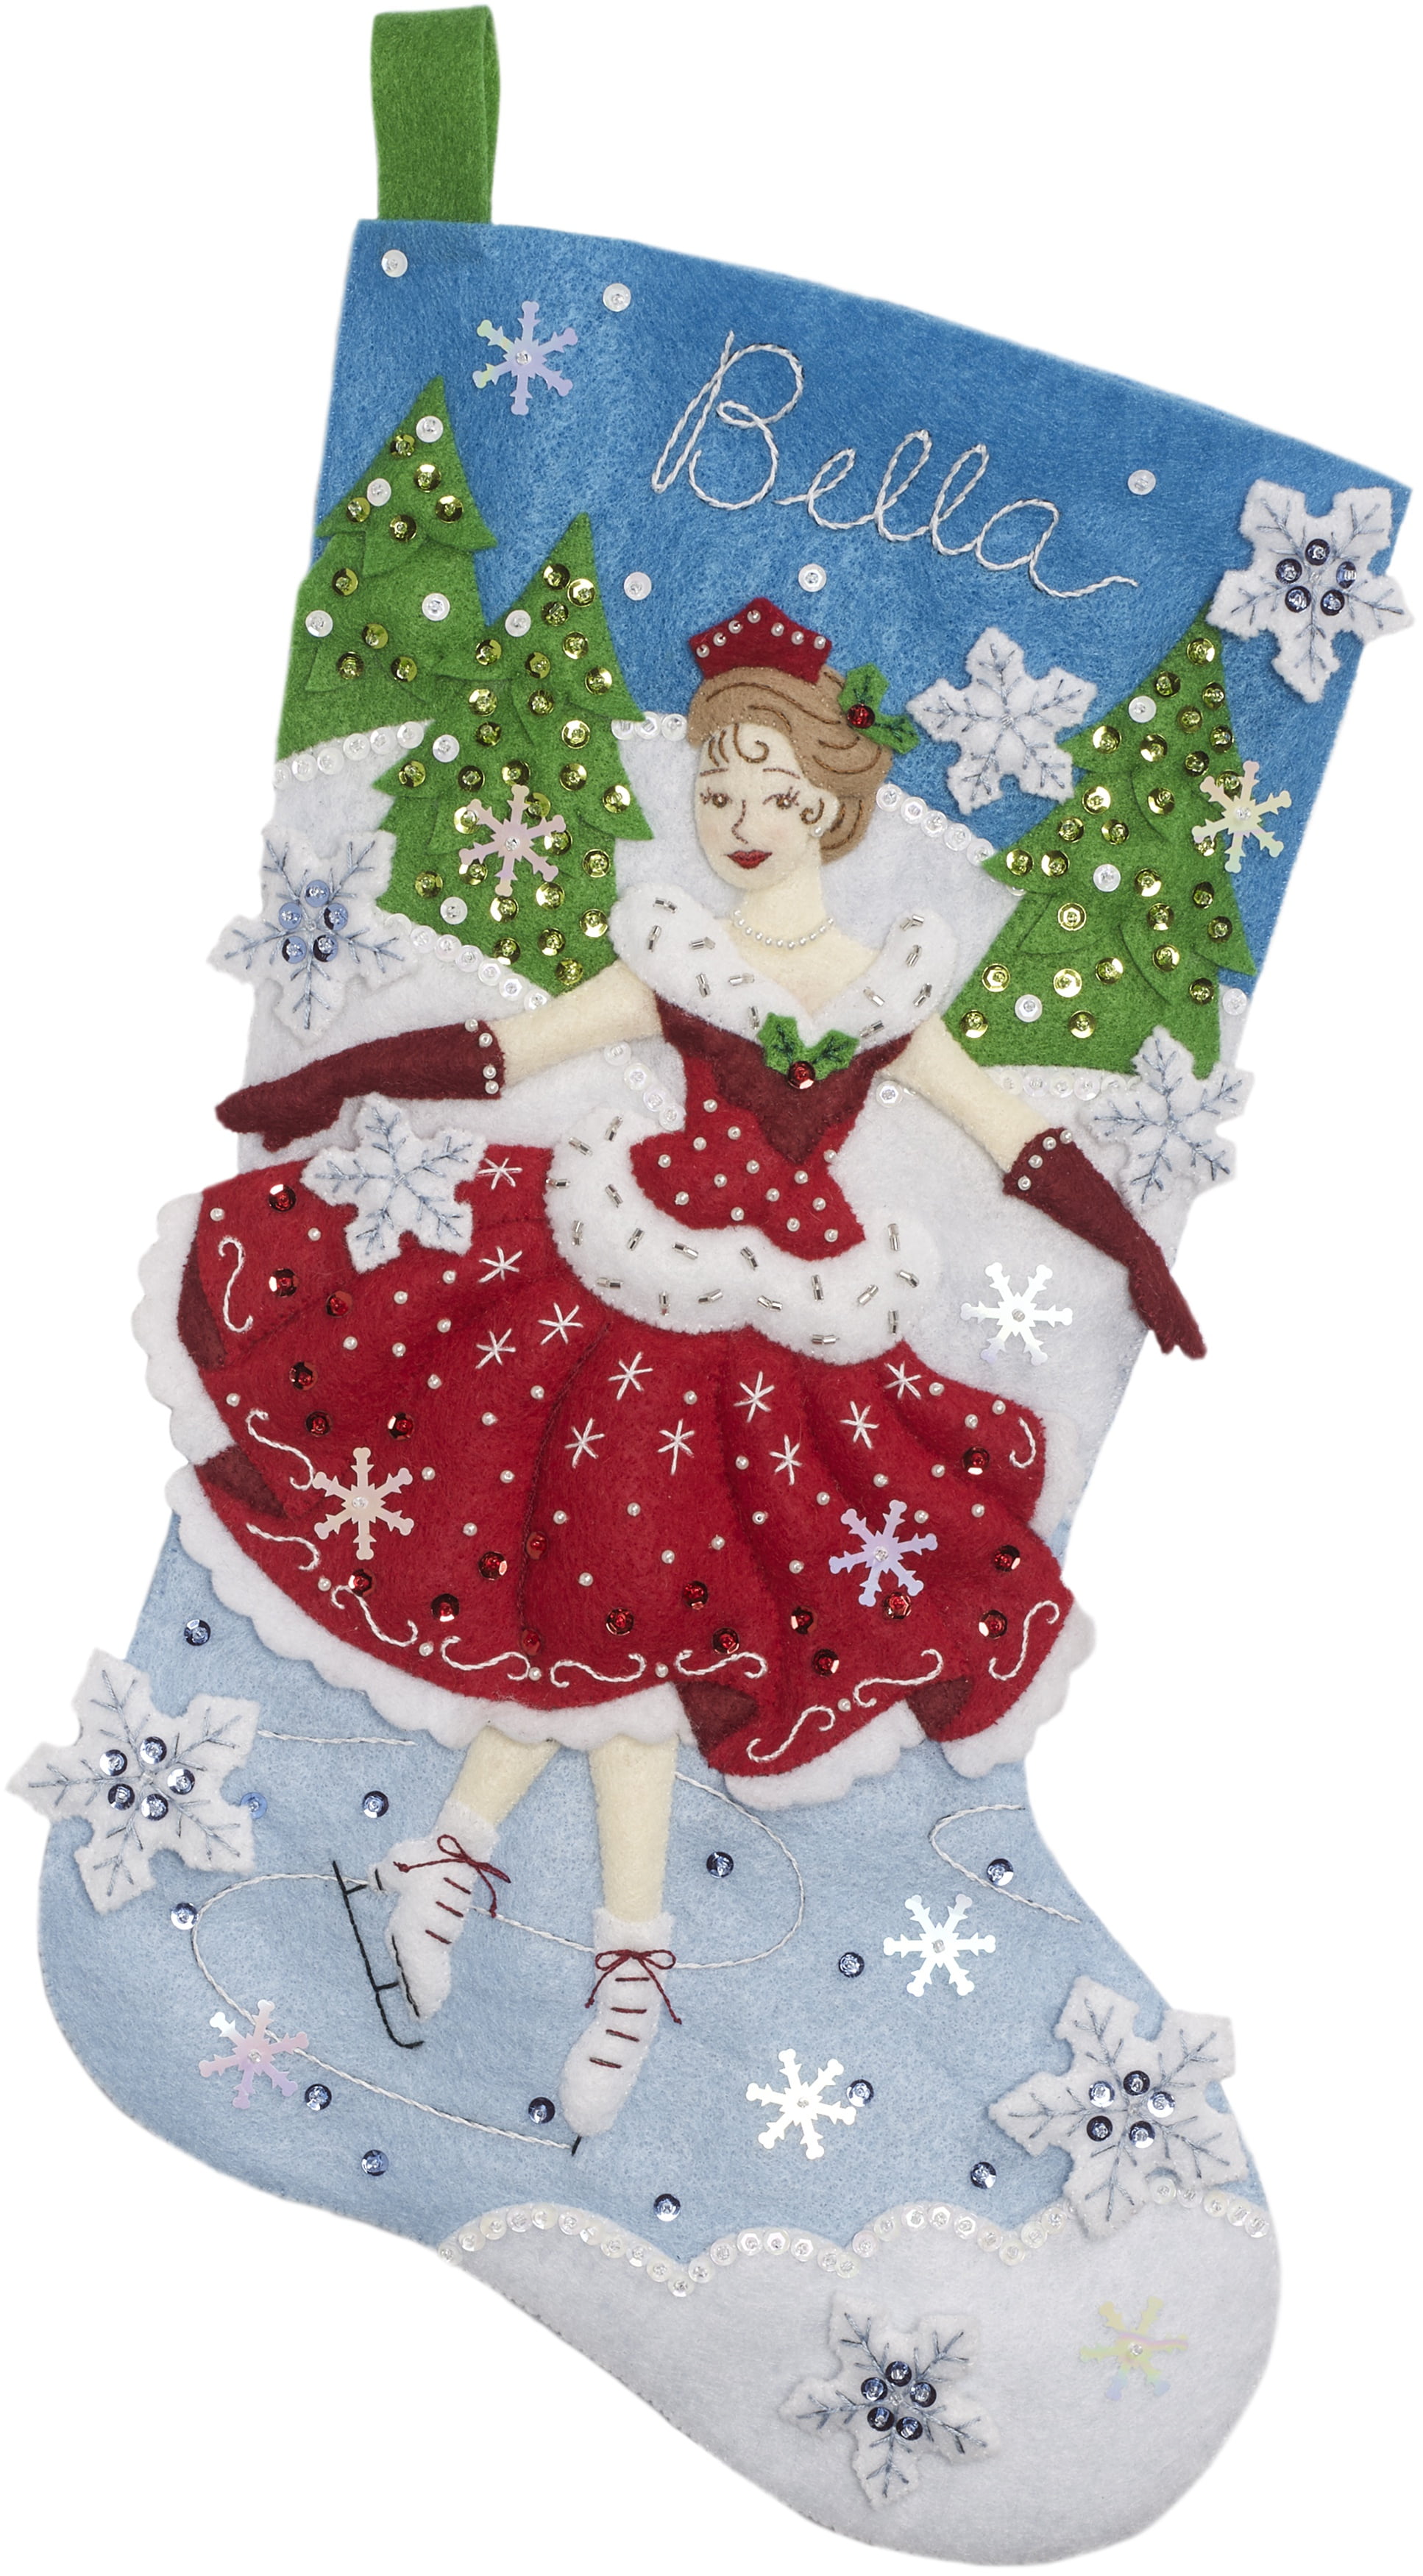 Bucilla Seasonal - Felt - Stocking Kits - A Christmas Skate